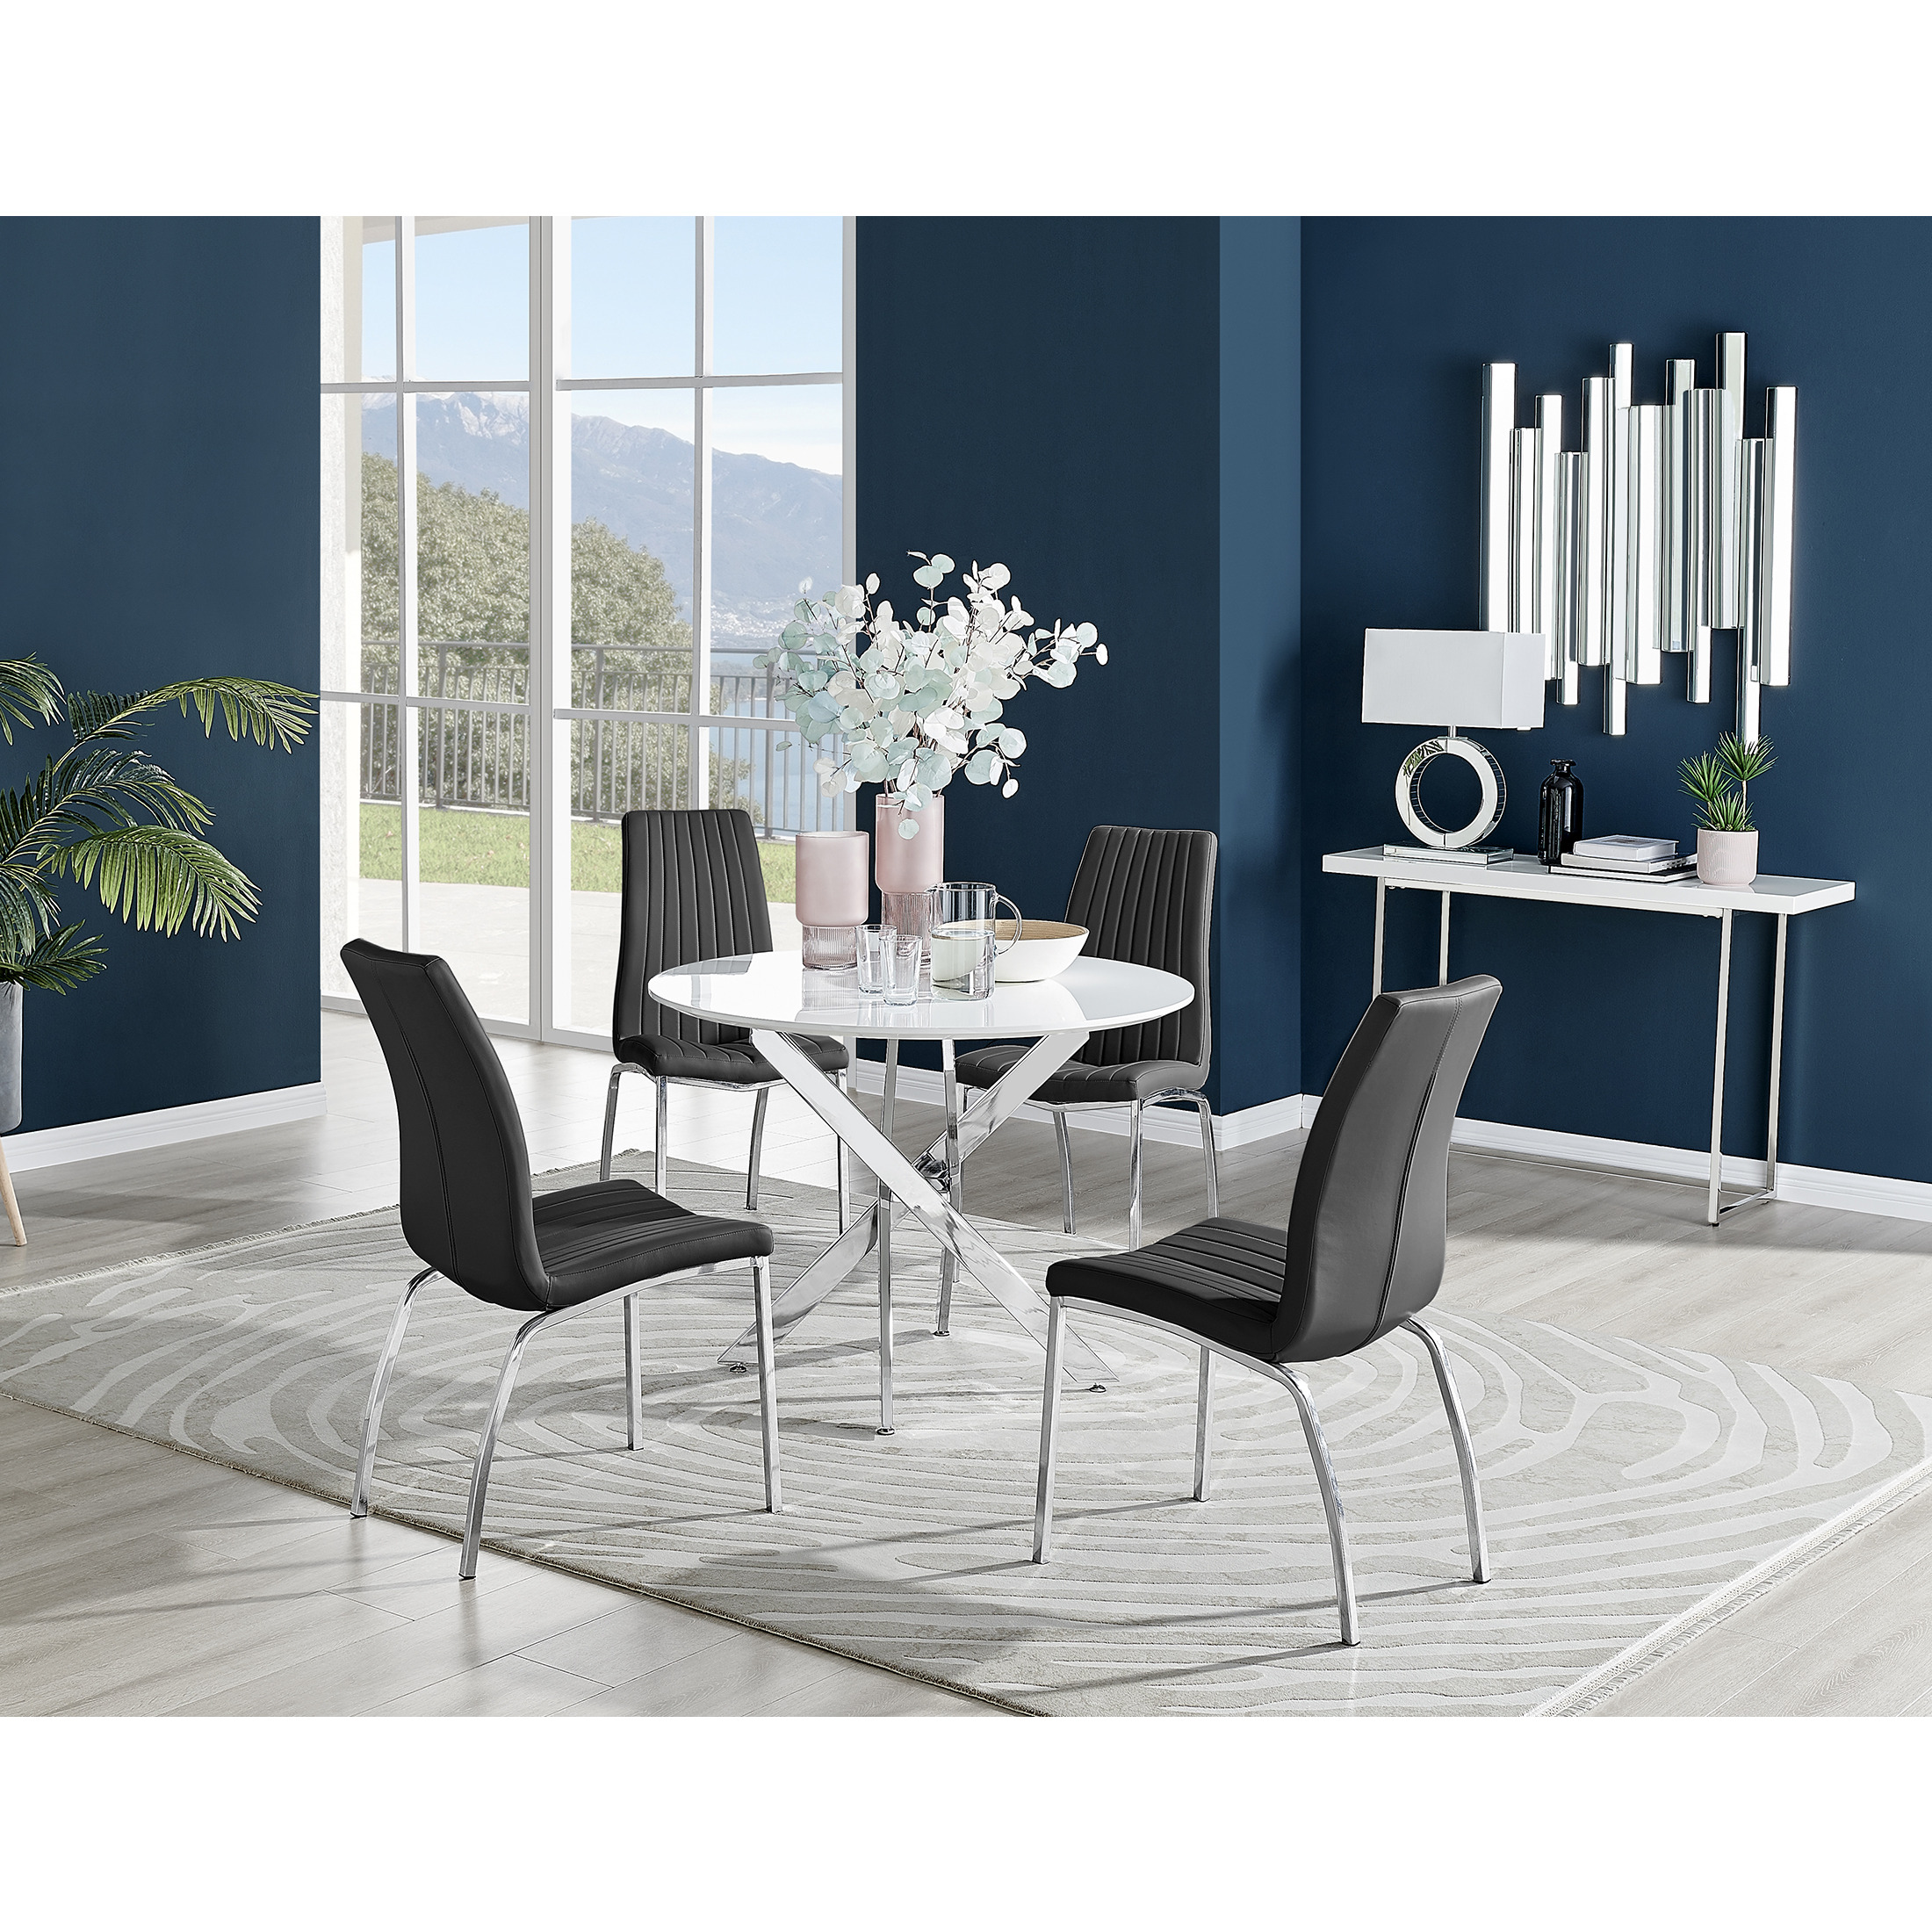 Novara White High Gloss Round Dining Table & 4 Isco Chairs